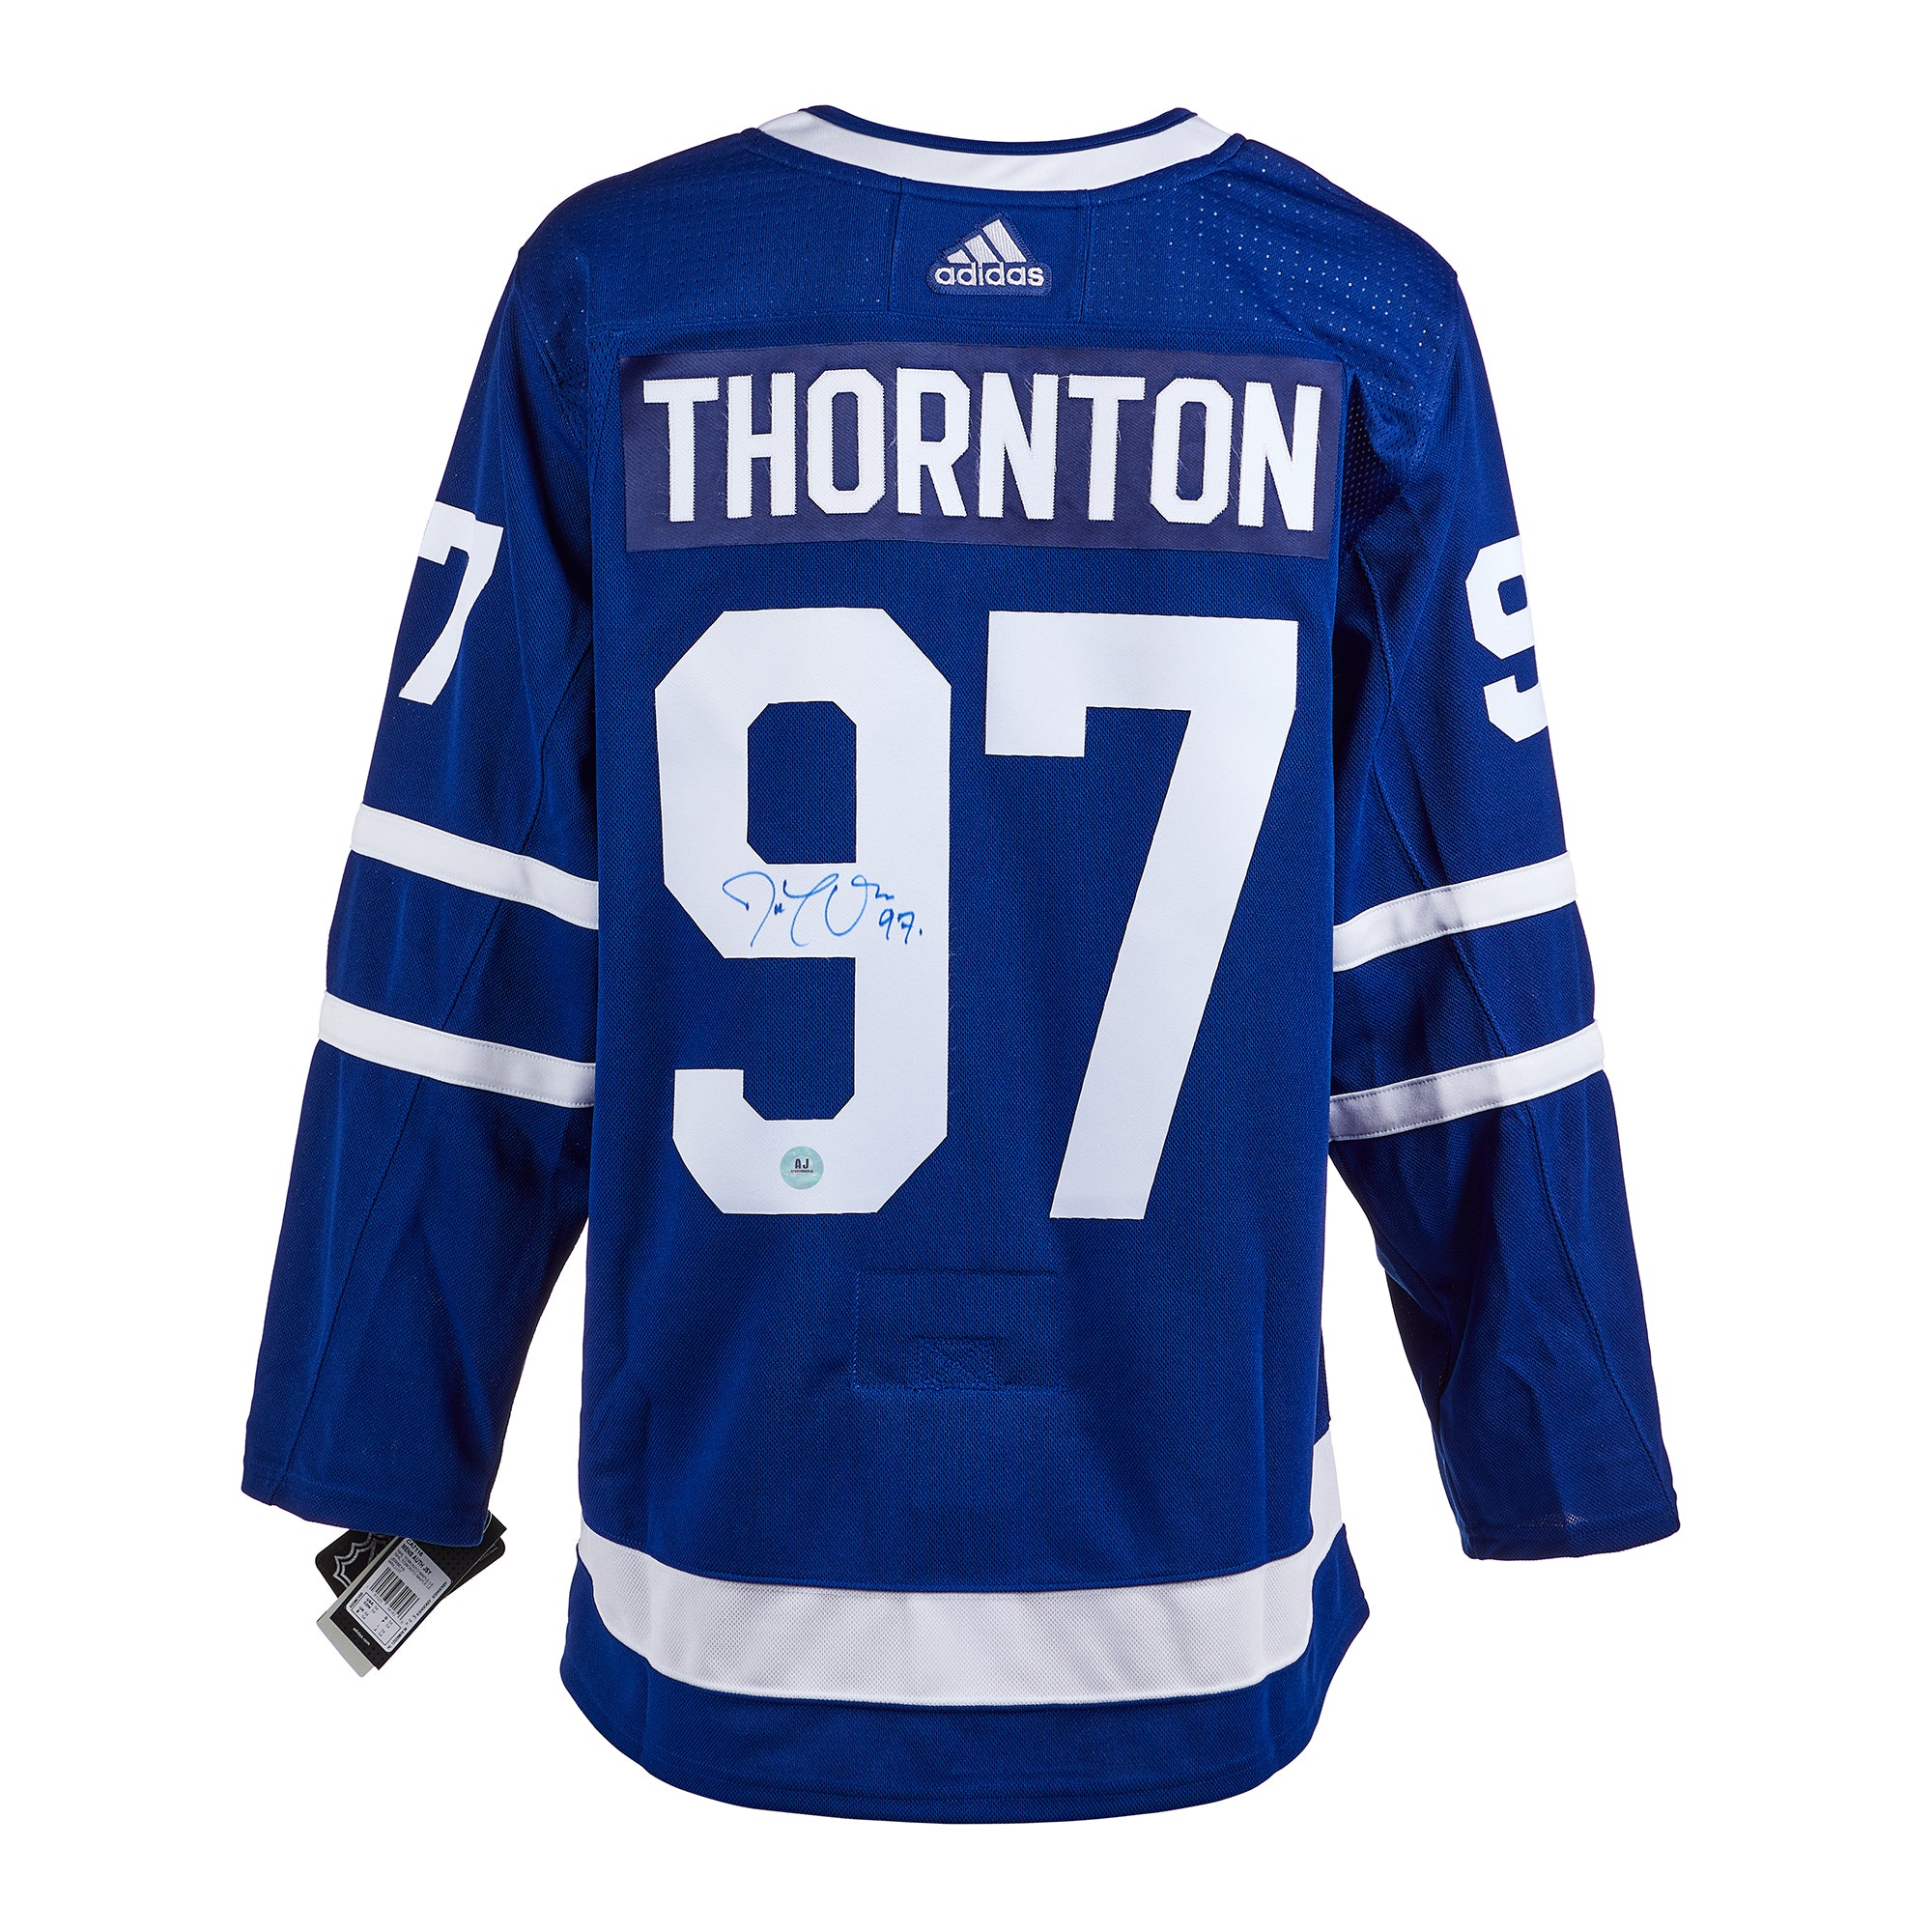 Joe Thornton San Jose Sharks Adidas Pro Autographed Jersey - NHL